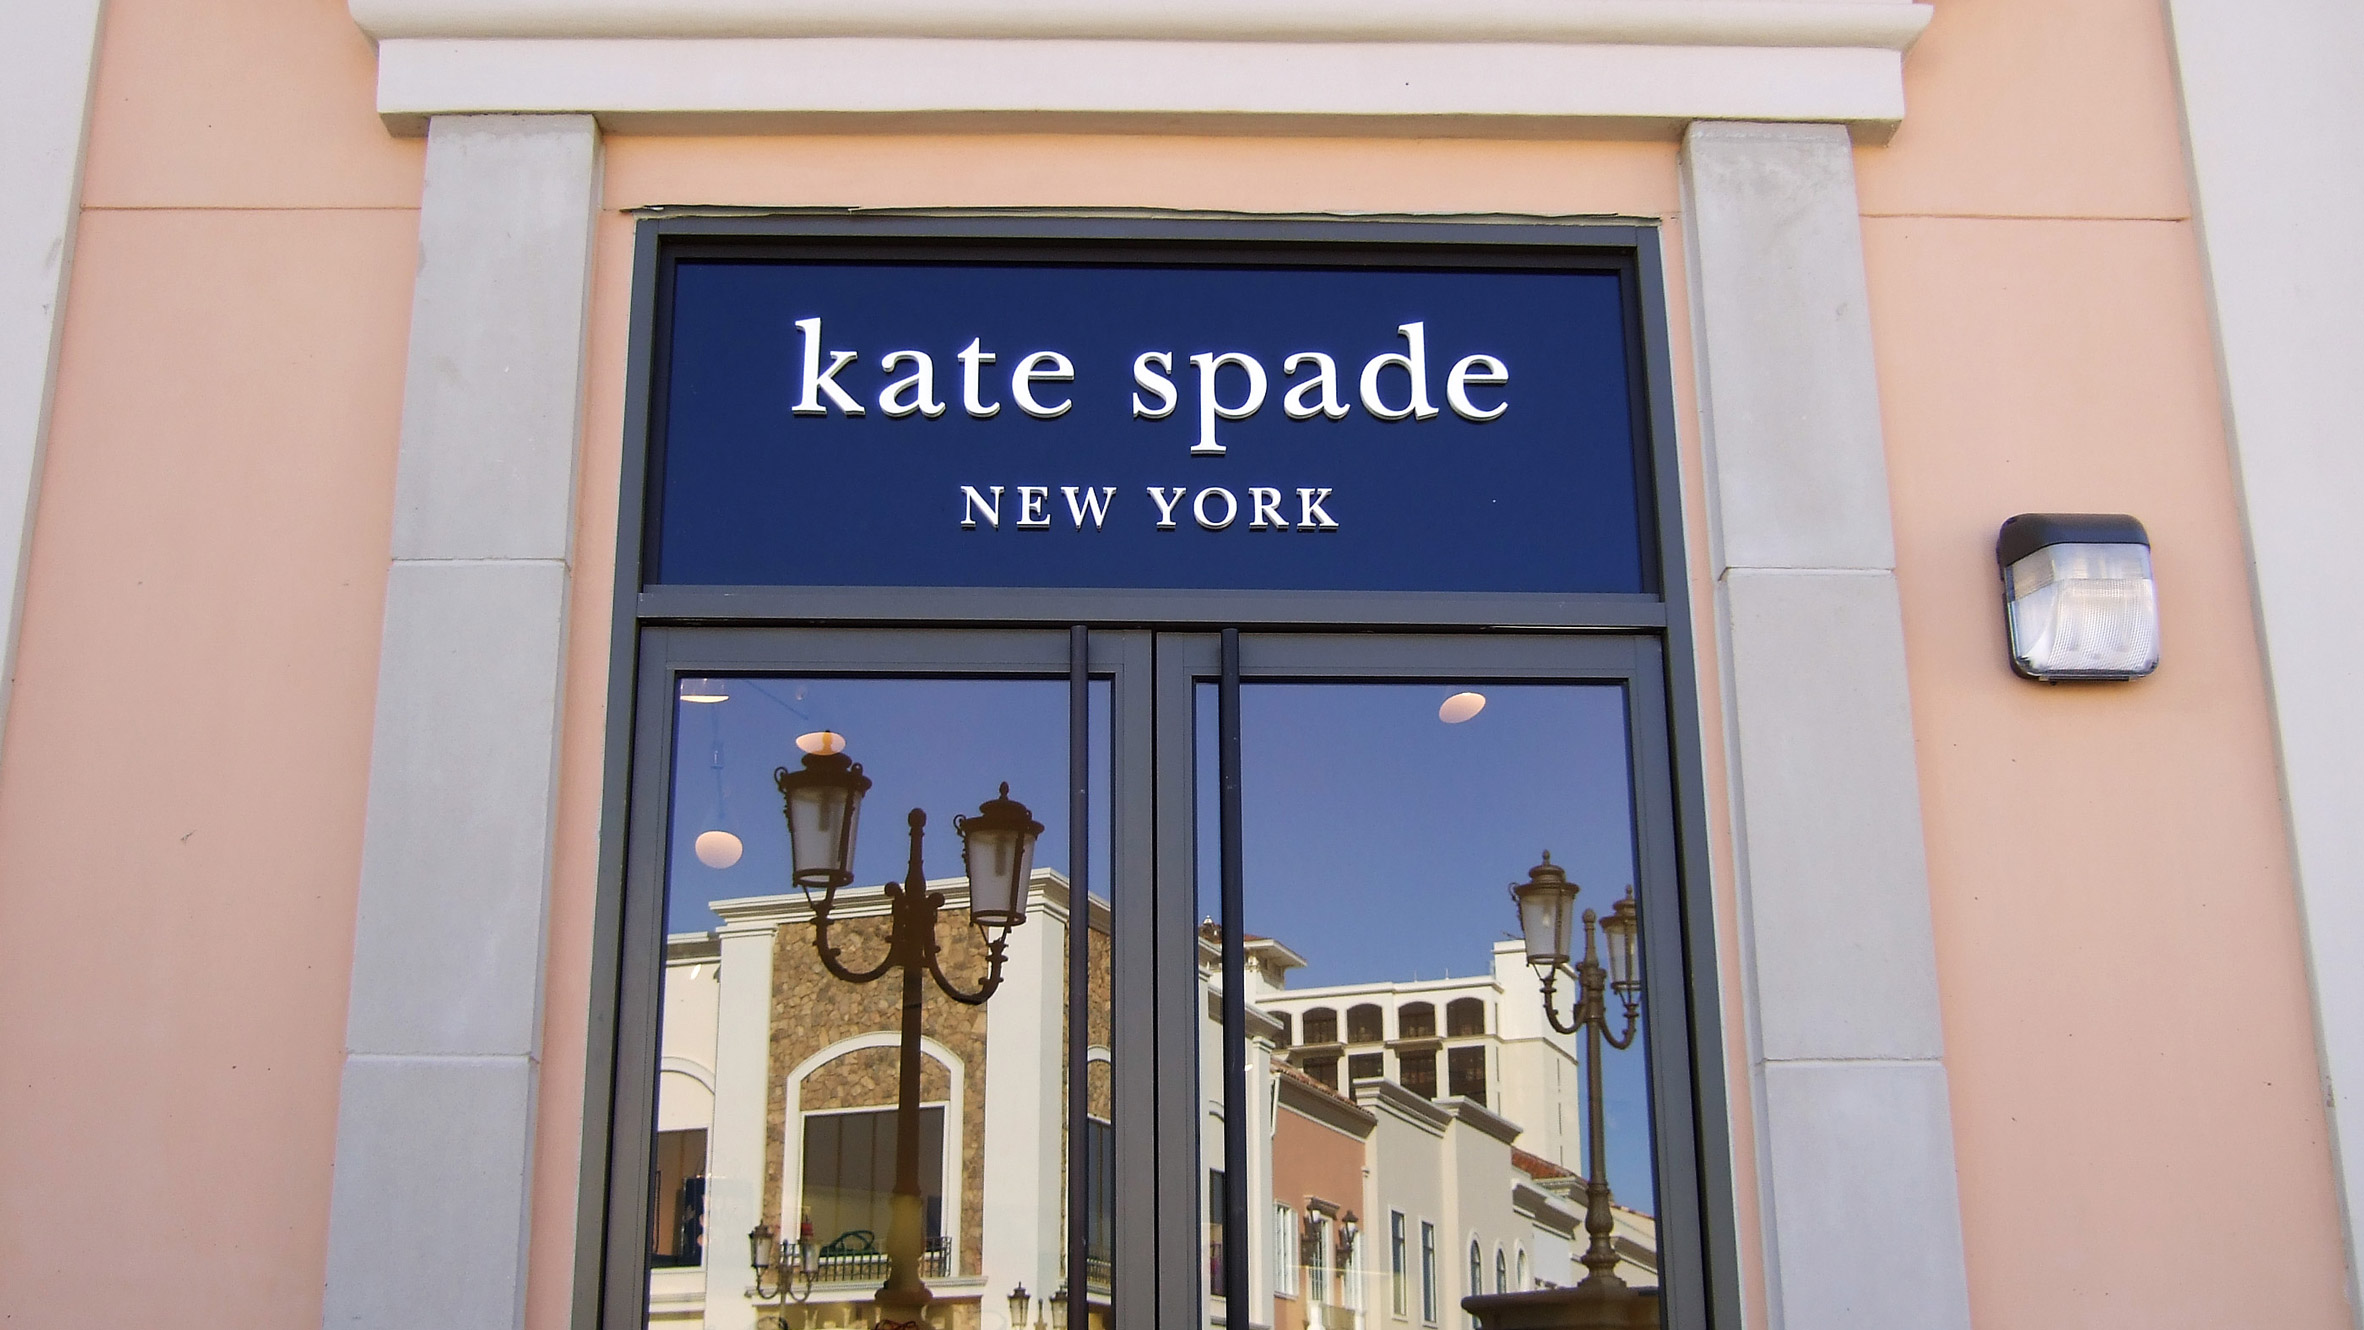 Fashion designer Kate Spade dies aged 55 in apparent suicide